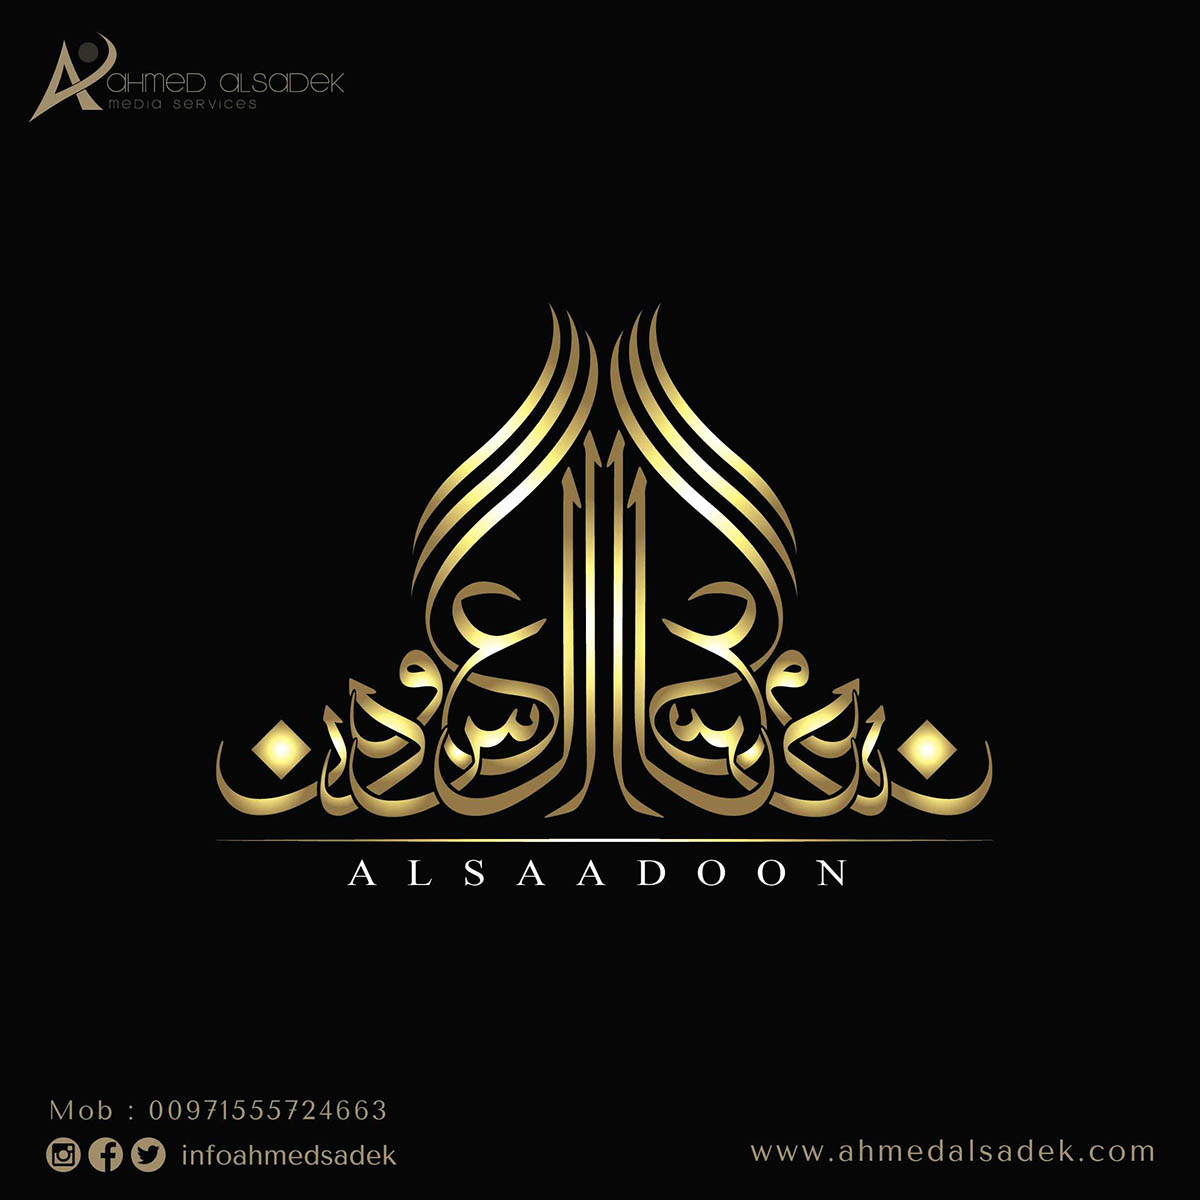 Logo Design arabic calligraphy تصميم مصمم شعار احمد الصادق